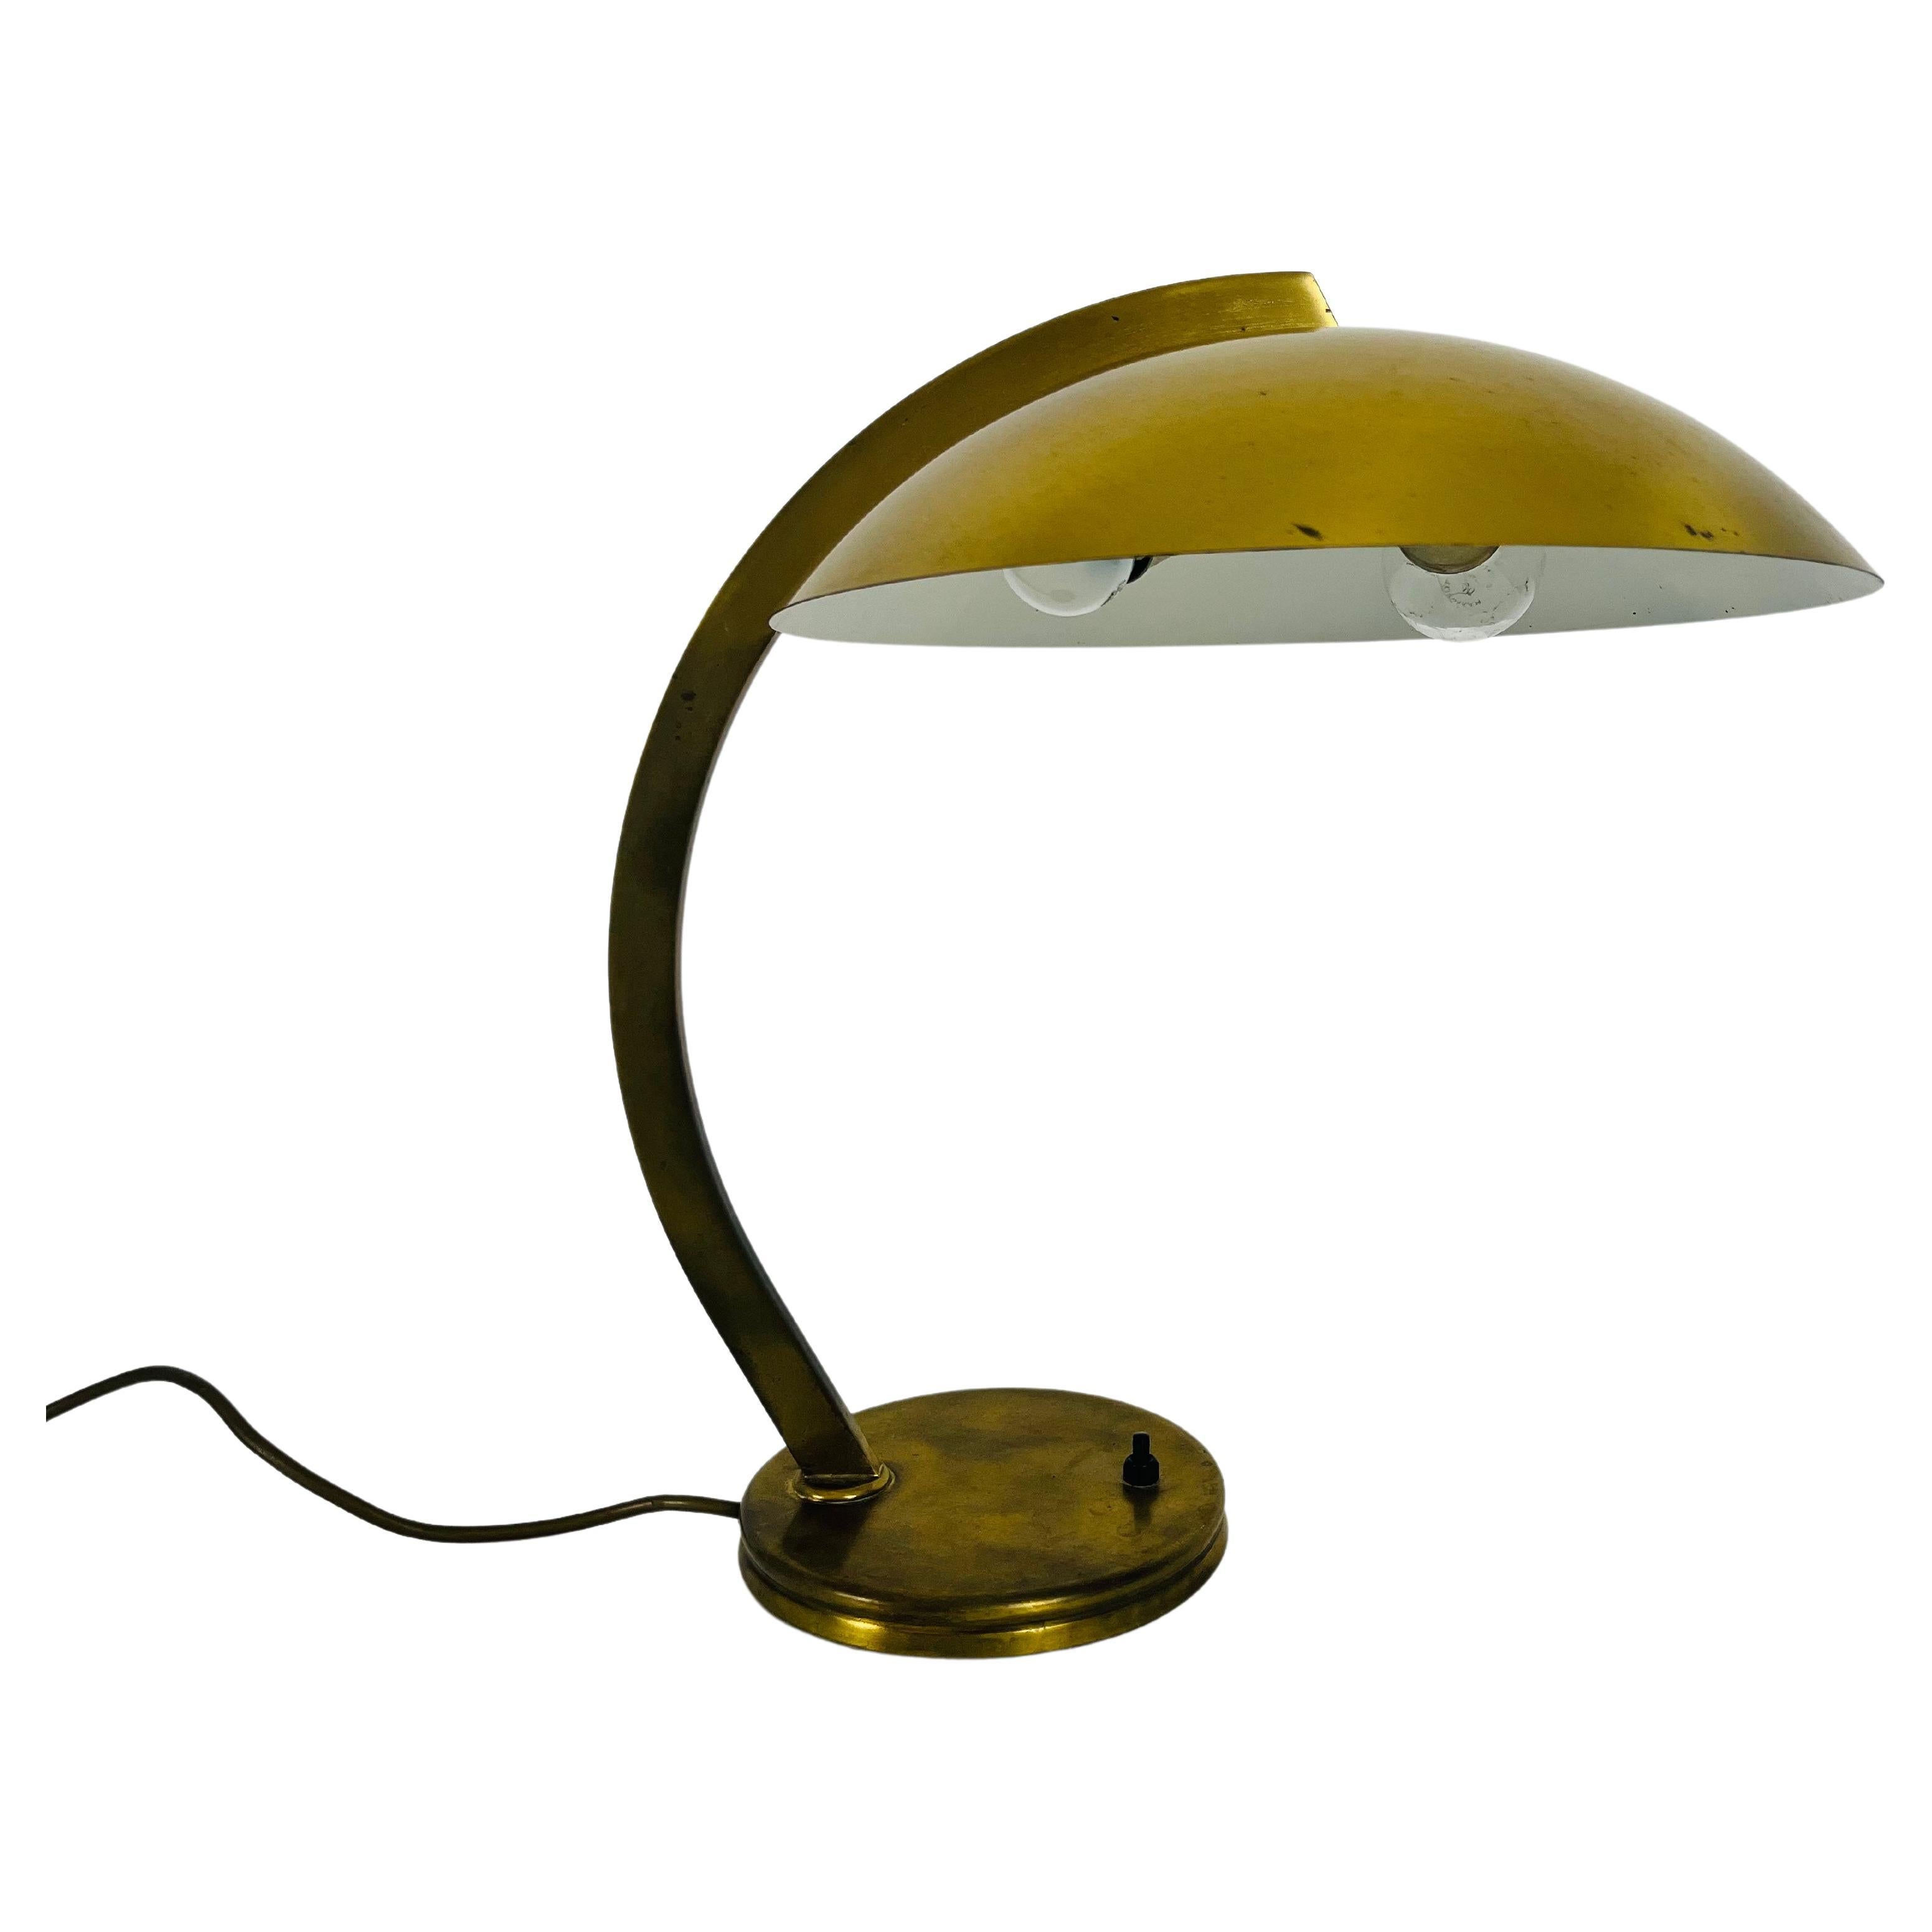 Hillebrand Midcentury Full Brass Table Lamp, 1960s, Germany